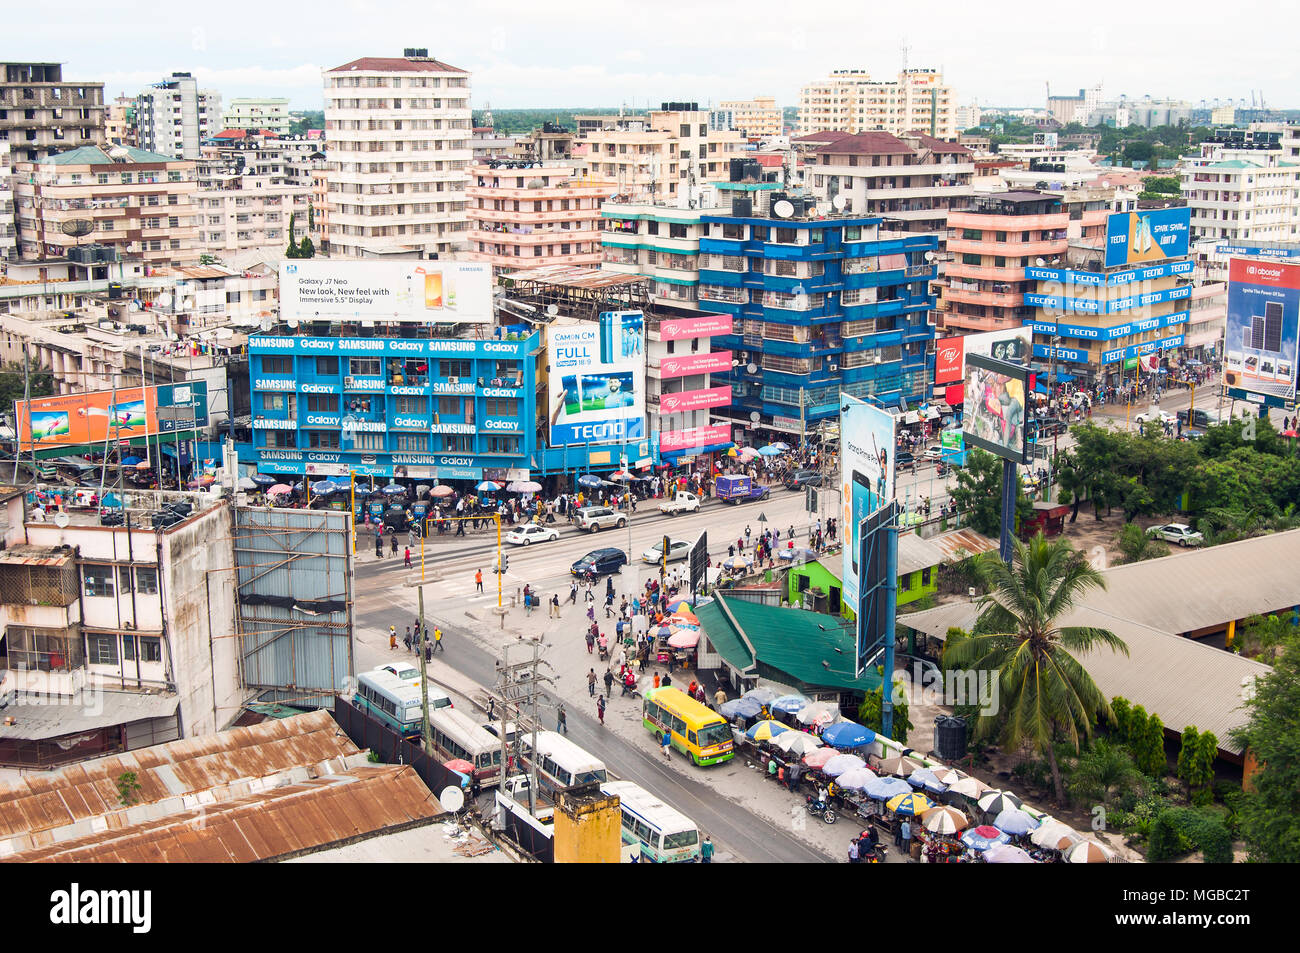 Vista aérea de la calle y la calle Msimbazi Uhuru, Kariakoo, mirando al sudeste, Dar es Salaam, Tanzania Foto de stock